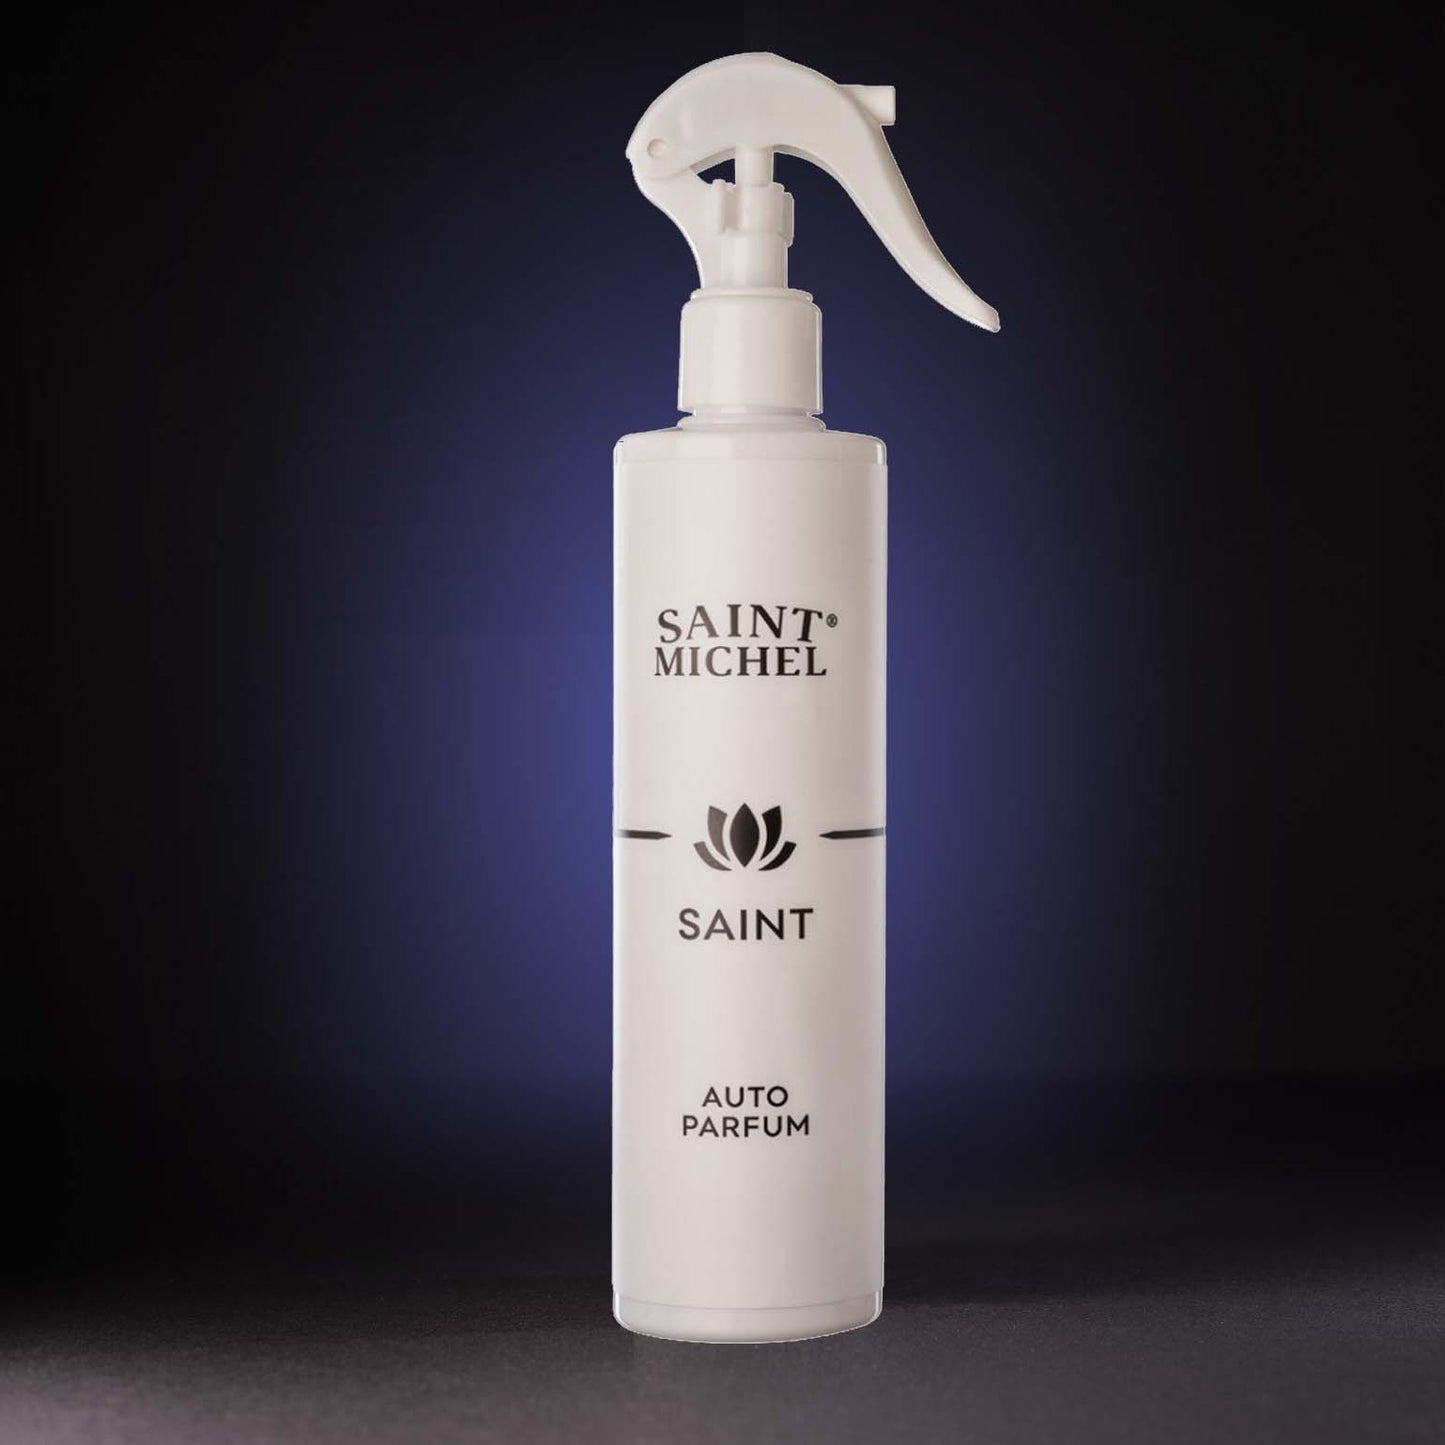 Autoparfum Saint 300ml – Saint Michel